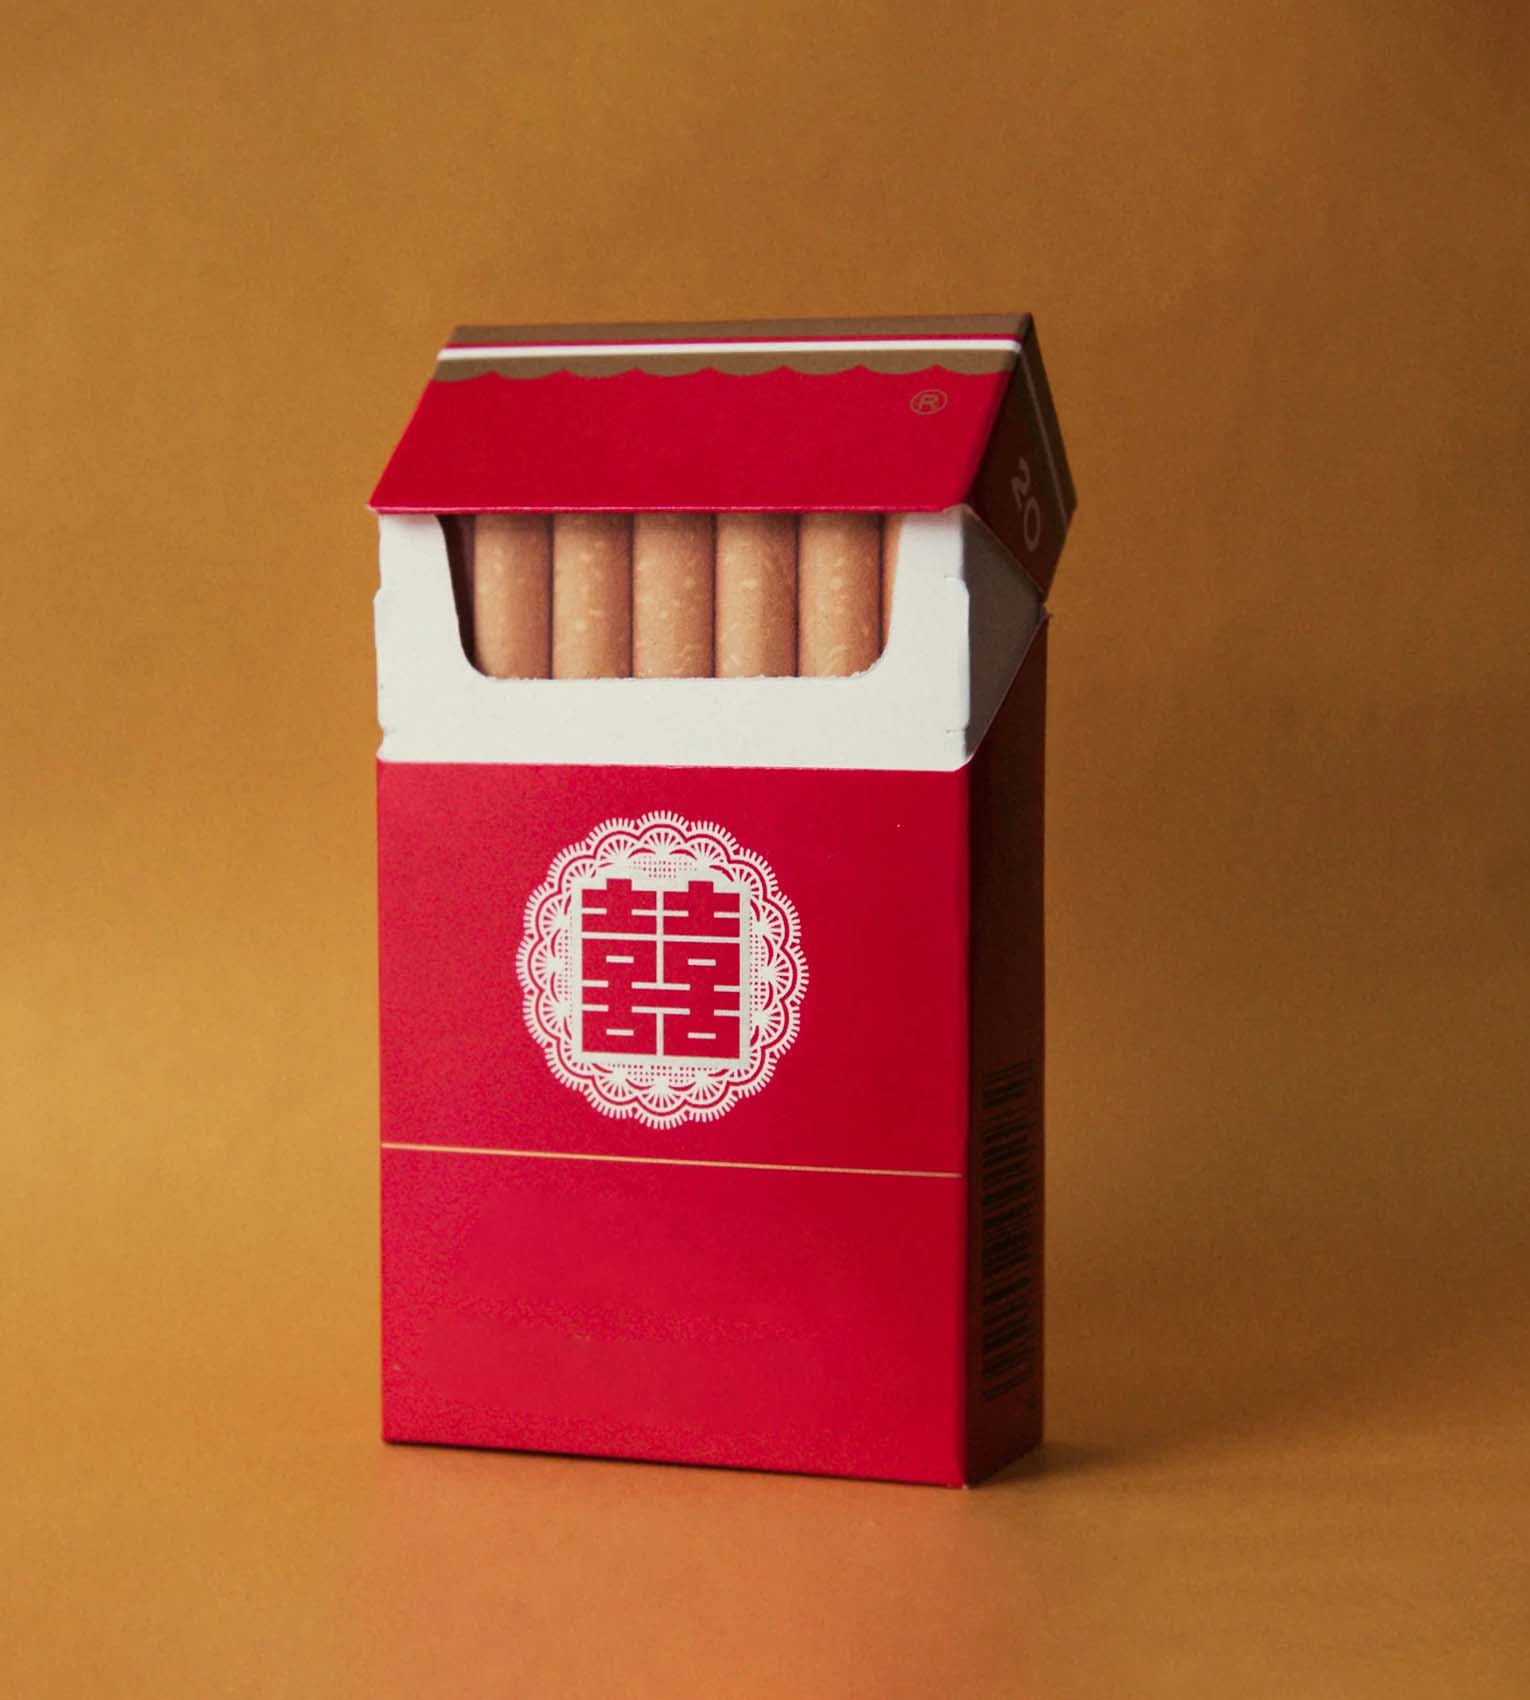 Paper Cigarette Boxes 